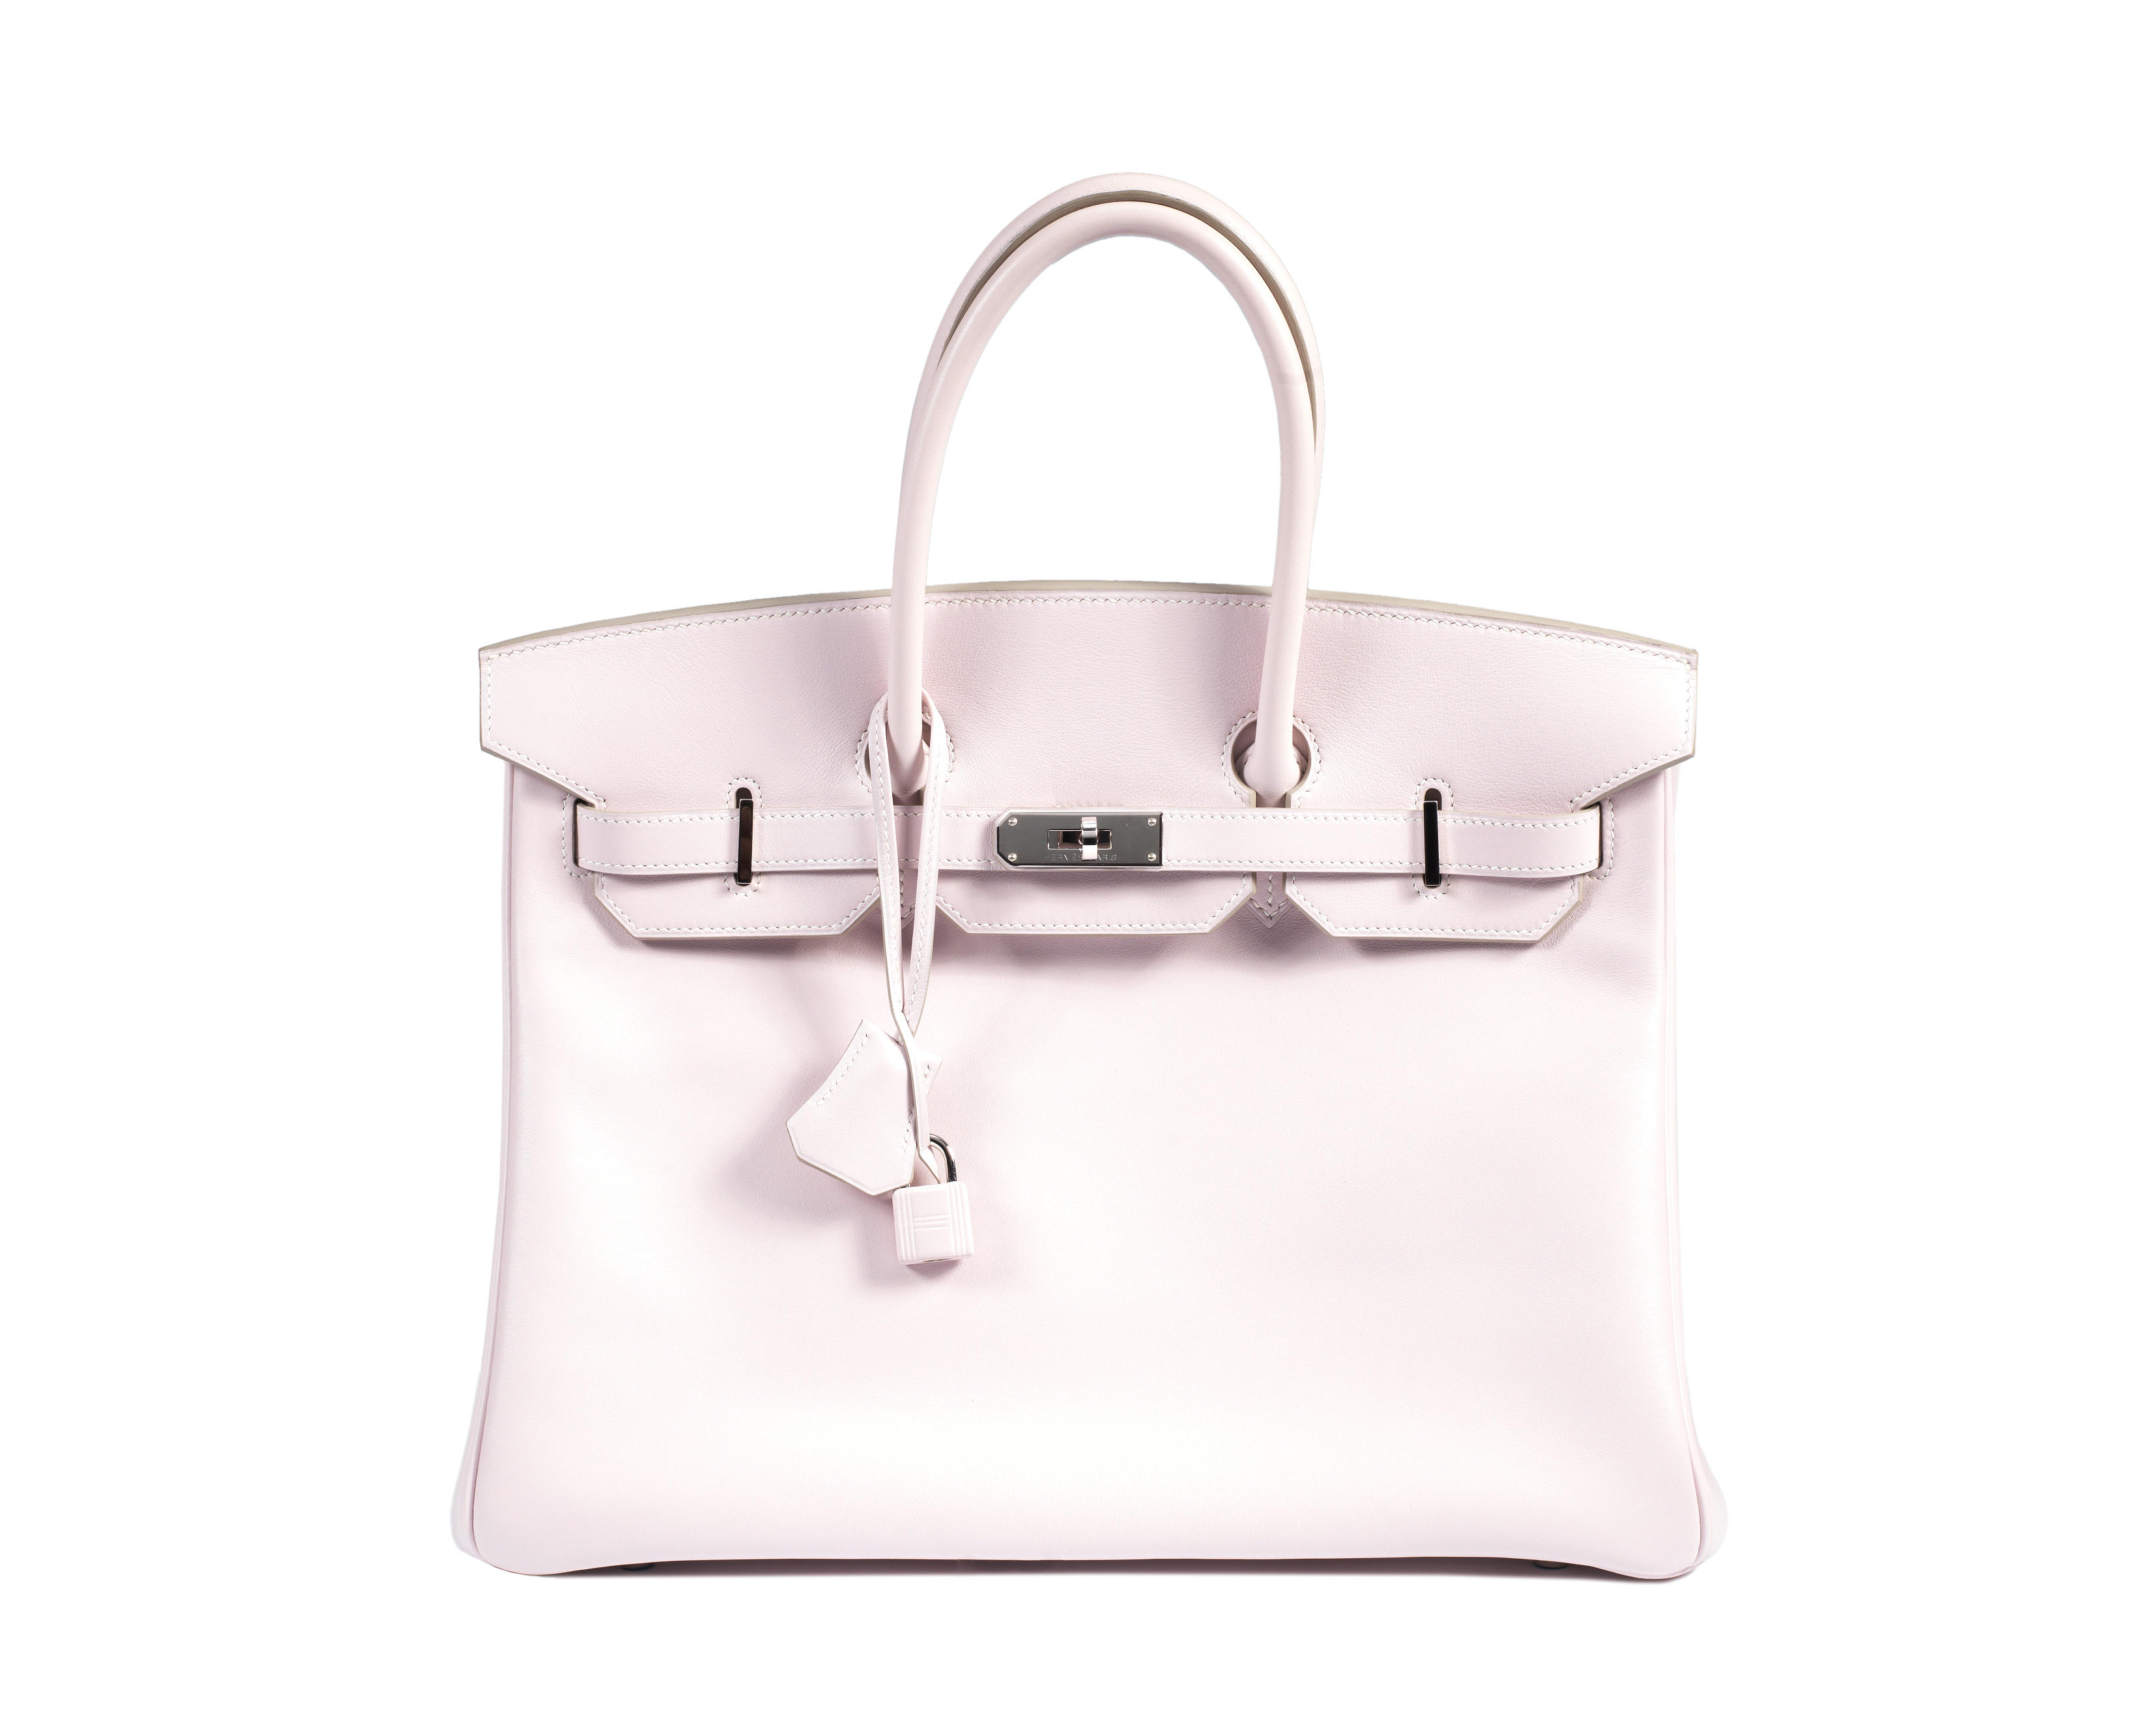 Bonhams : An Hermès pale pink leather Birkin bag, 2008